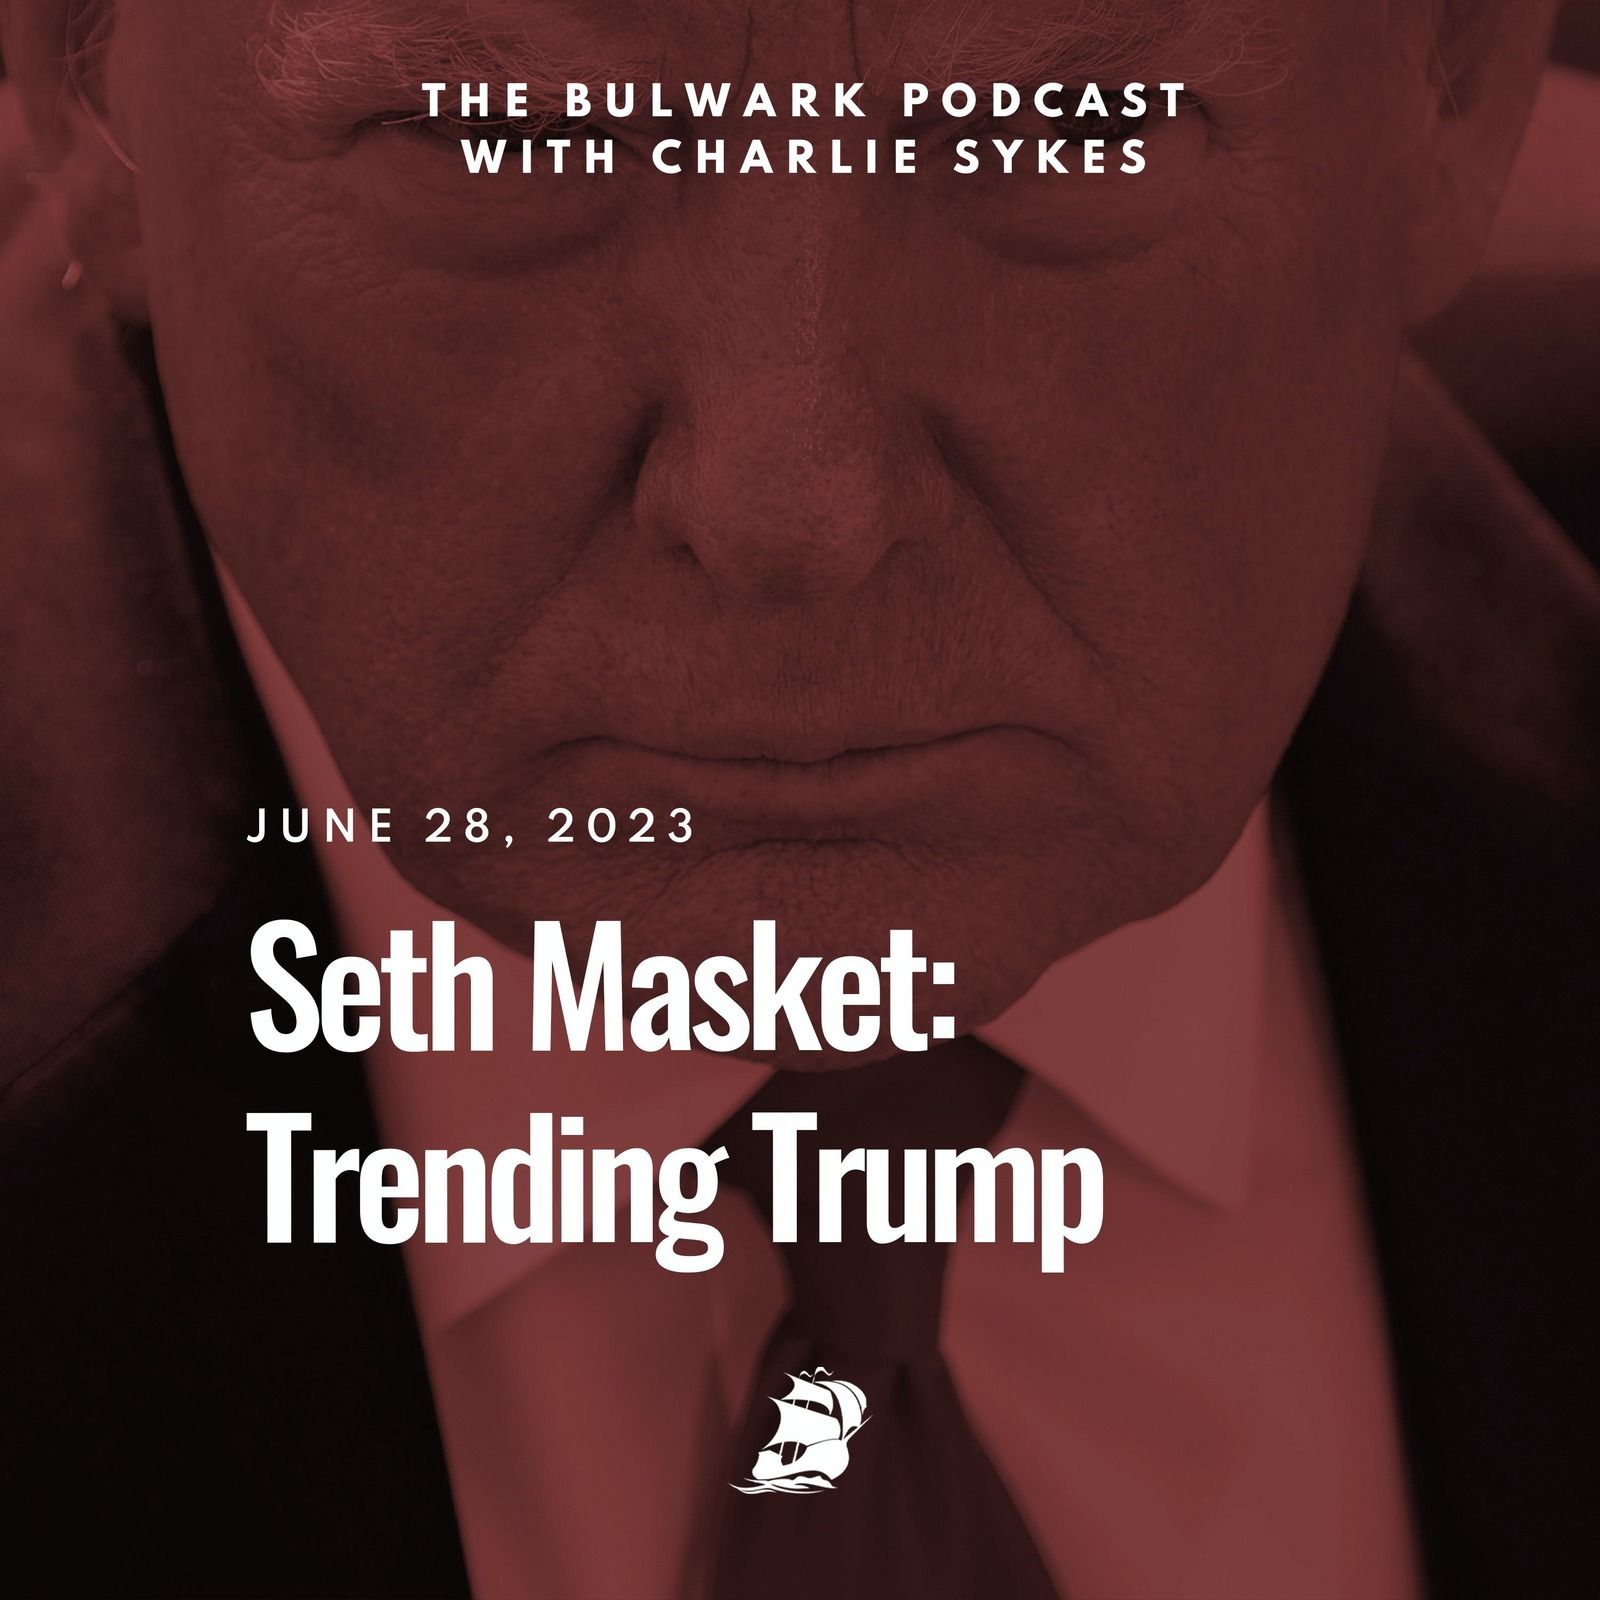 Seth Masket: Trending Trump